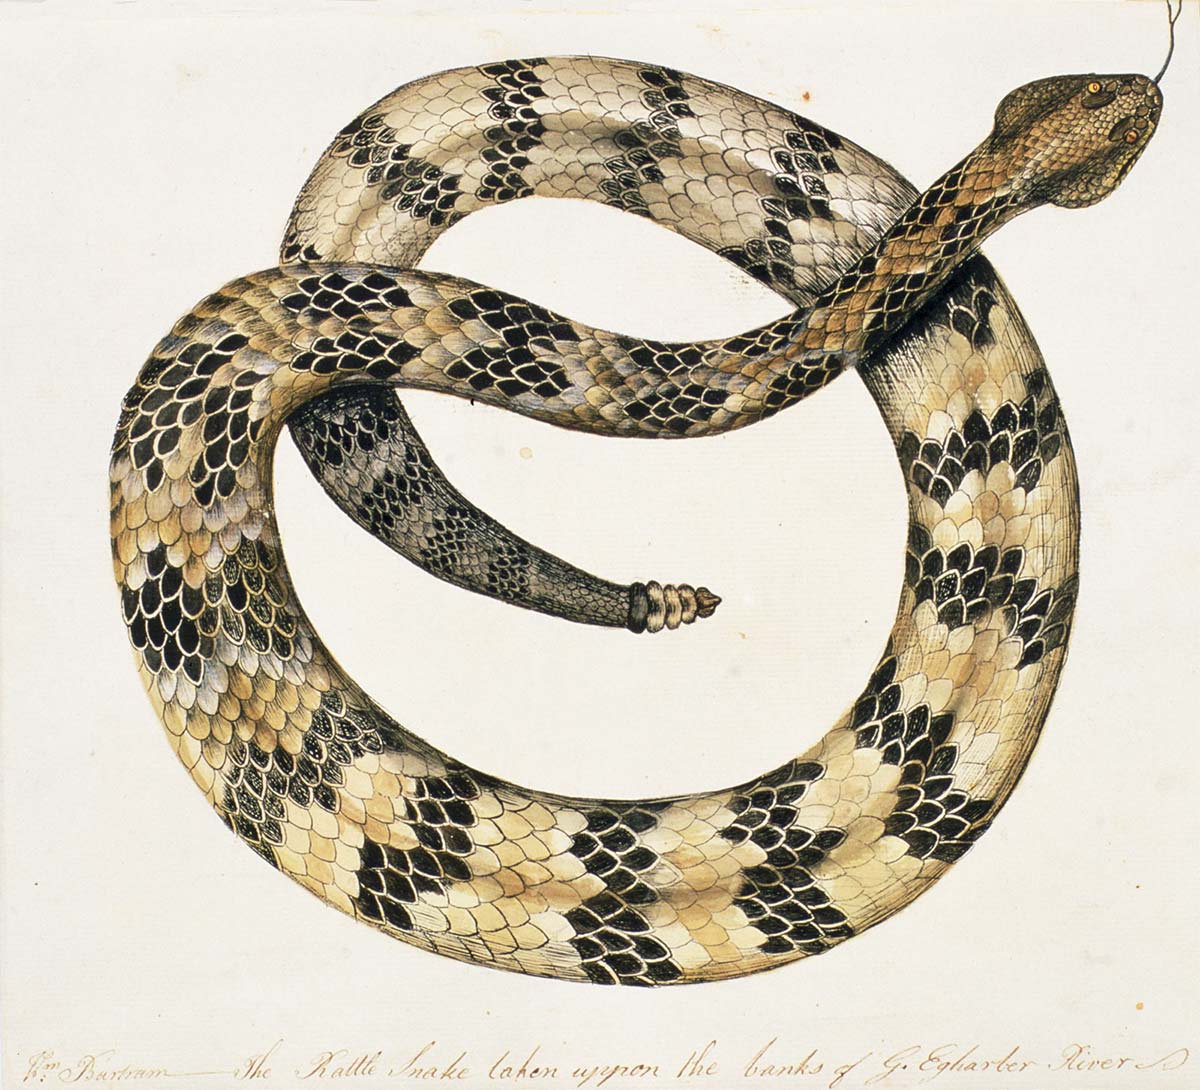 18th-century engraving of a rattlesnake